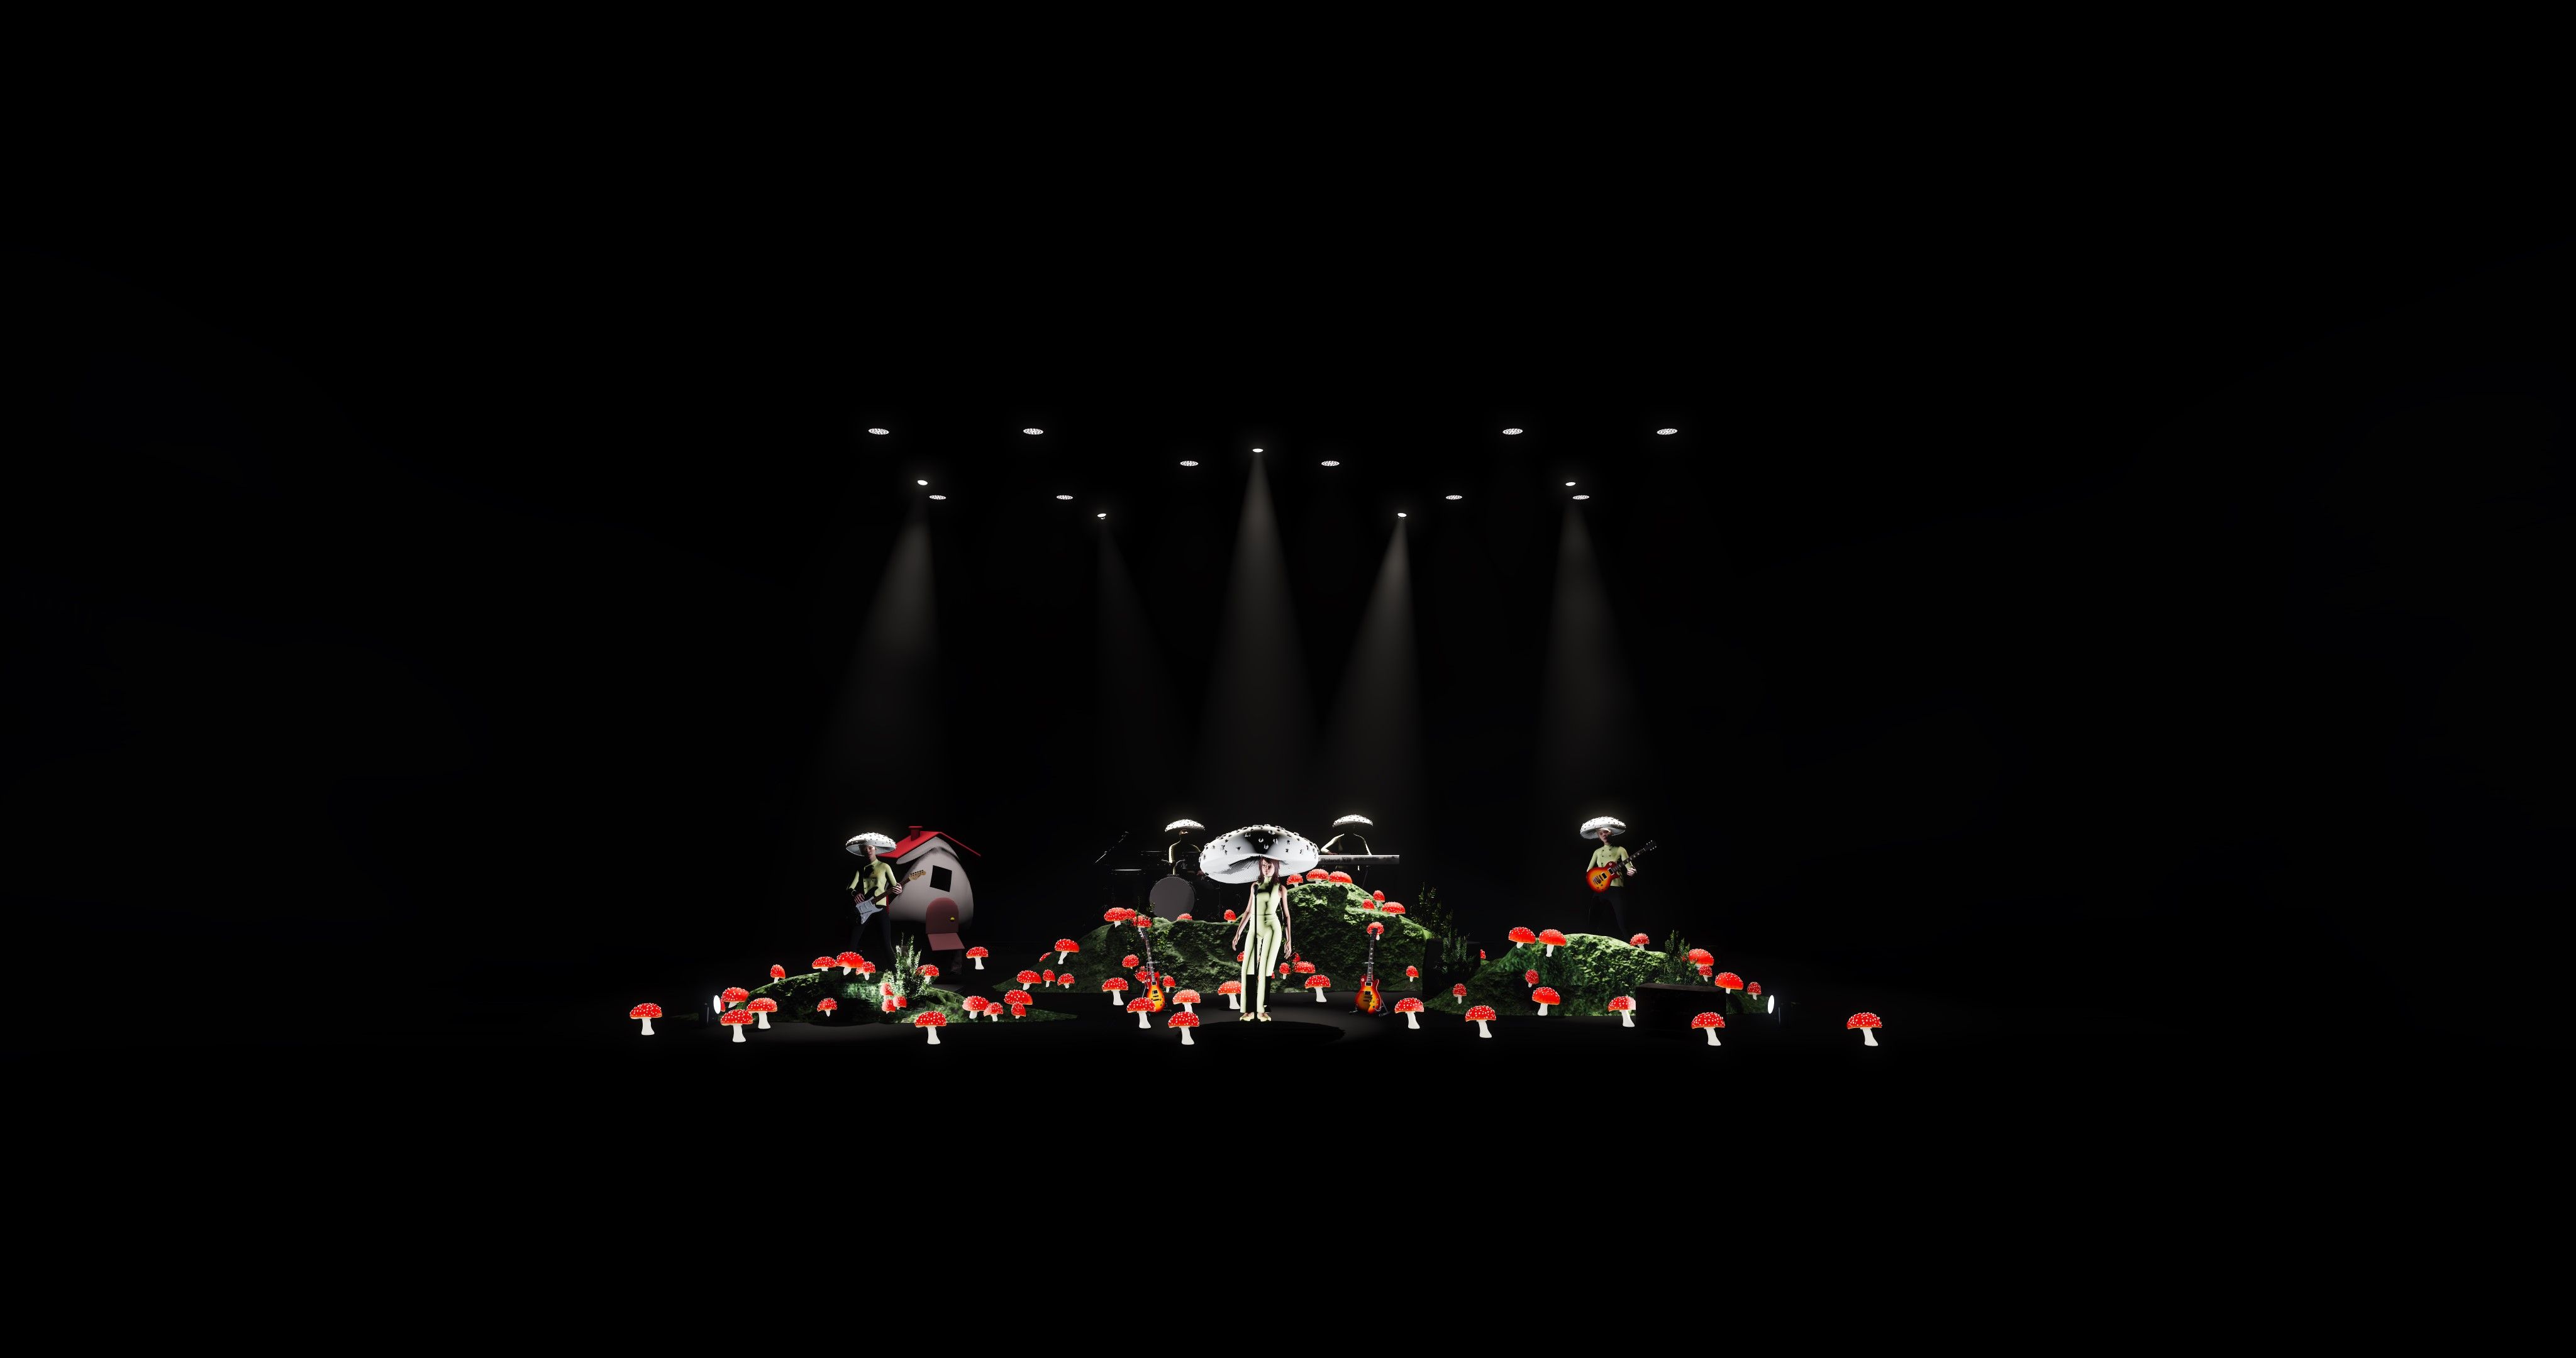 Pomme, Consolation Tour, Stage Design